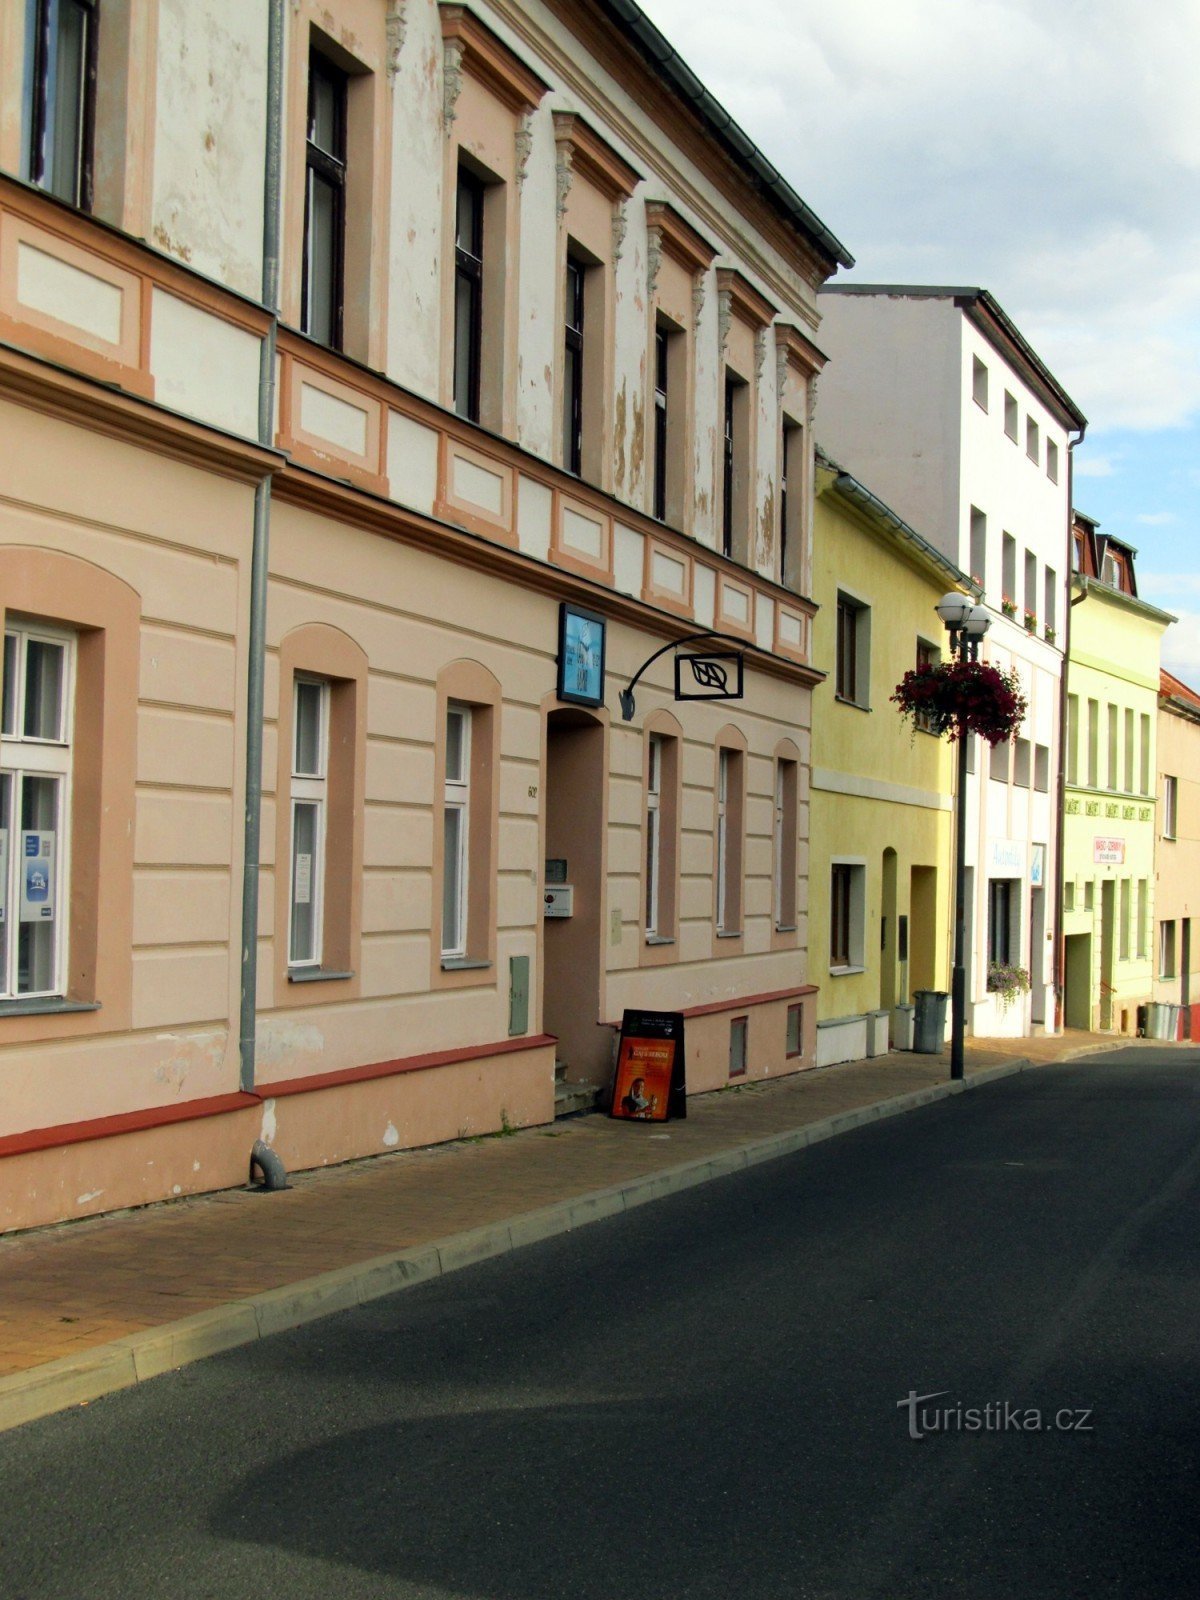 Huset i Jirásková gaden i Kadani, hvor Kashmír tehuset ligger